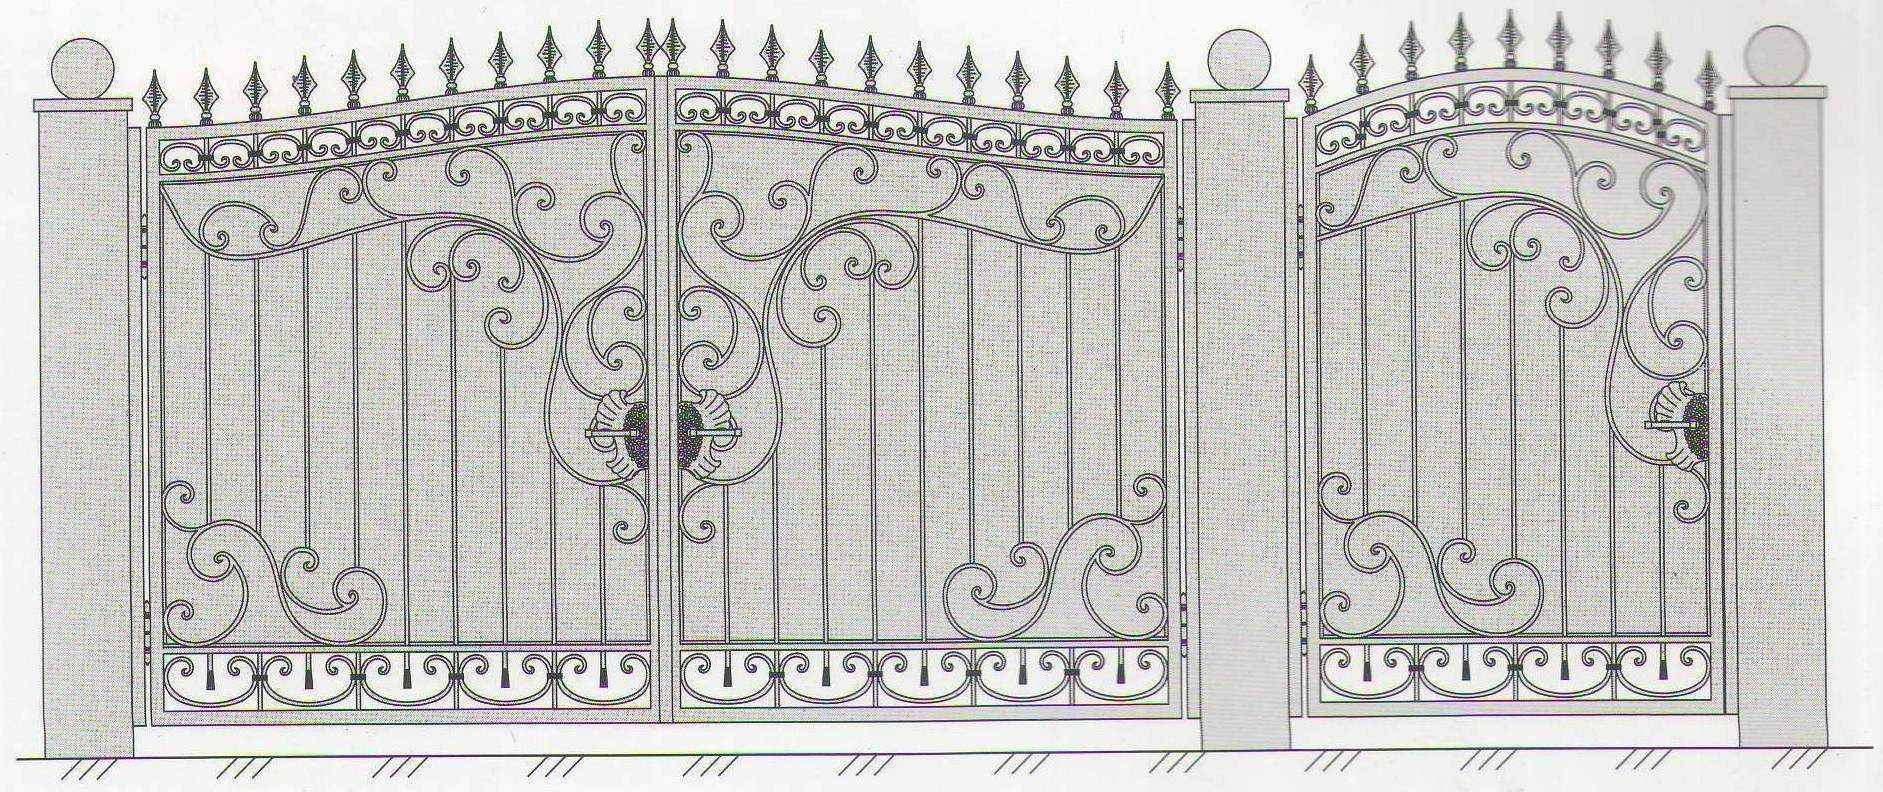 Kovtorgmsc кованые ворота